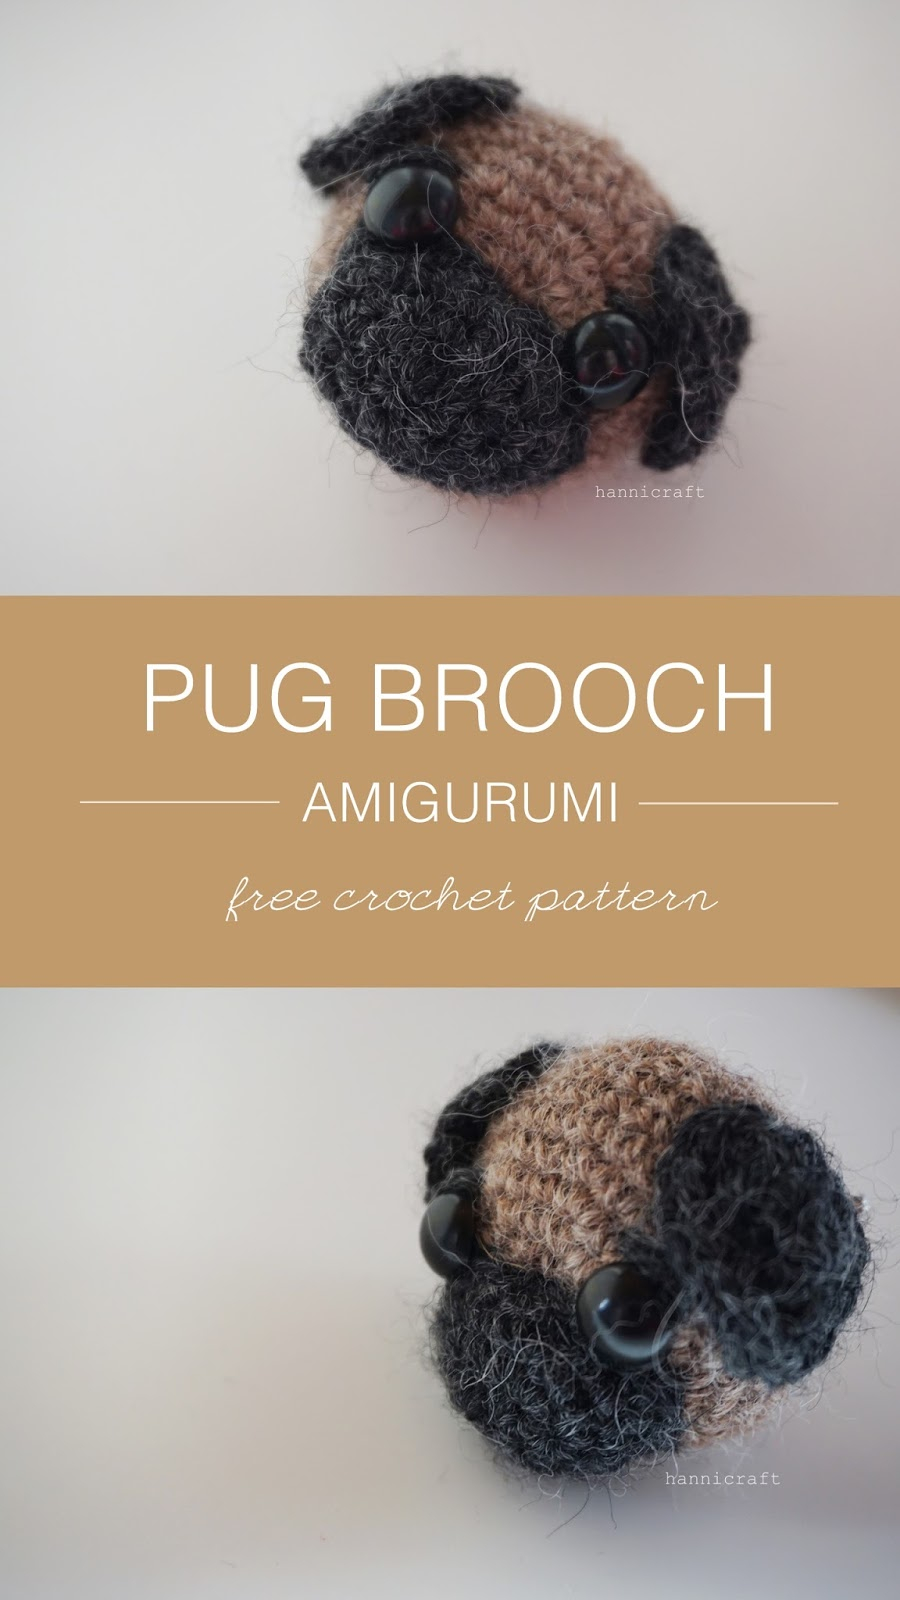 Knitted Pug Pattern Hannicraft Pug Brooch Free Pattern